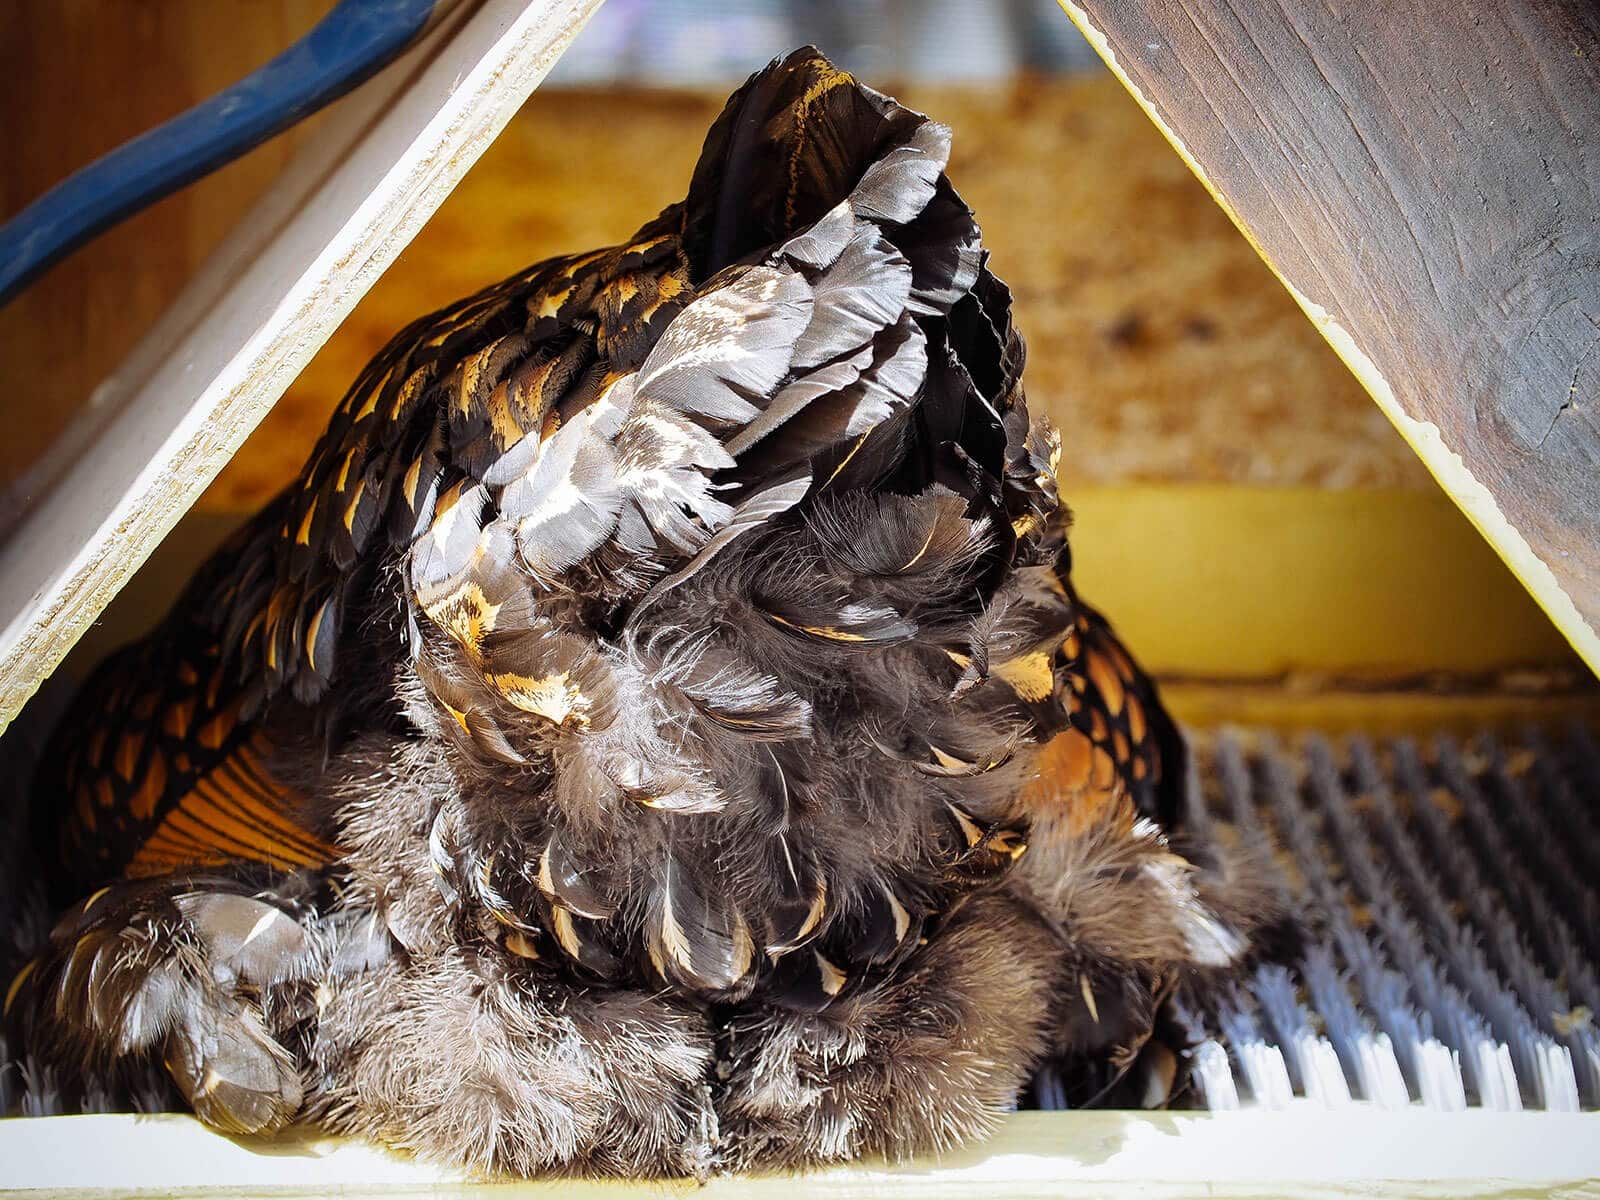 Broody hen sitting in an empty nest